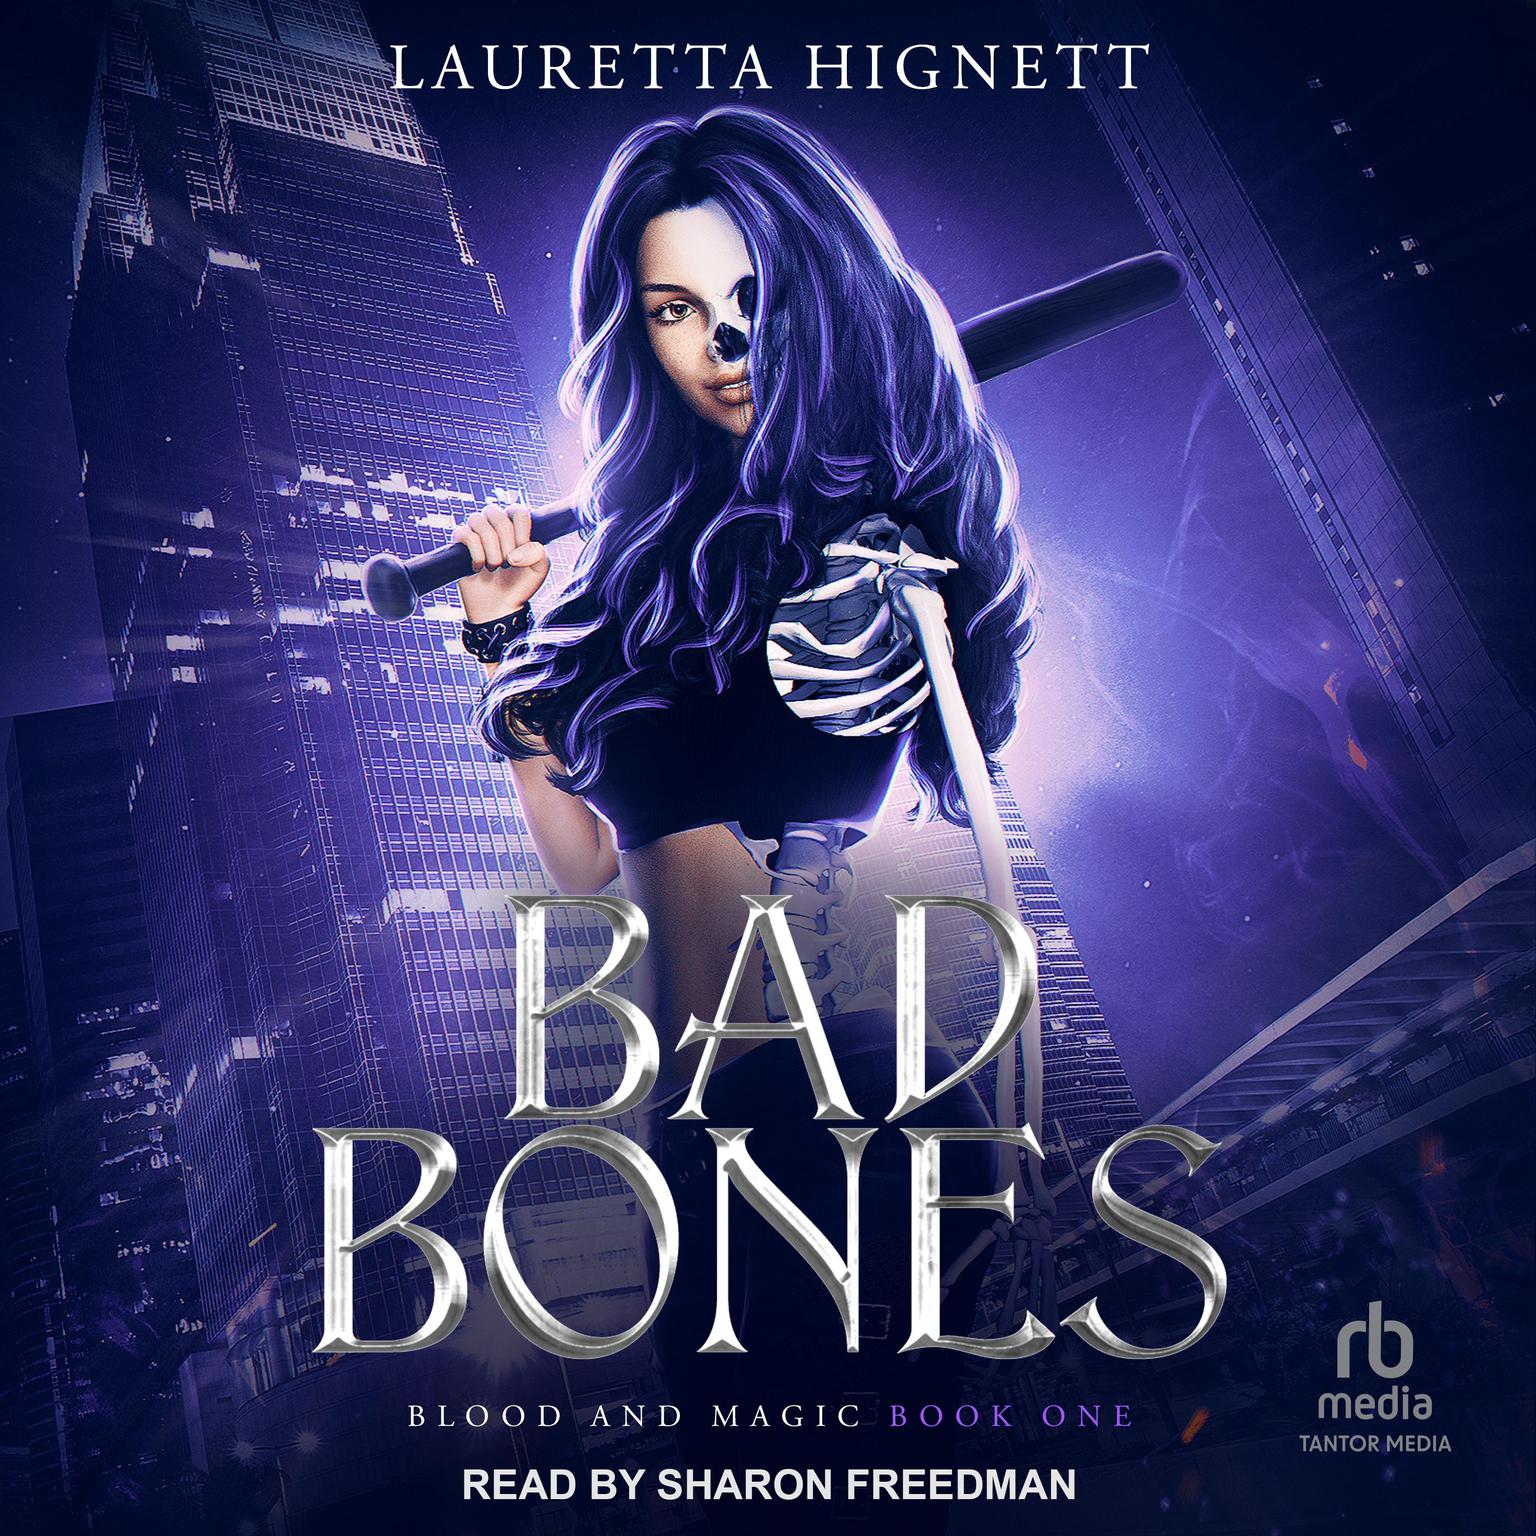 Bad Bones Audiobook, by Lauretta Hignett